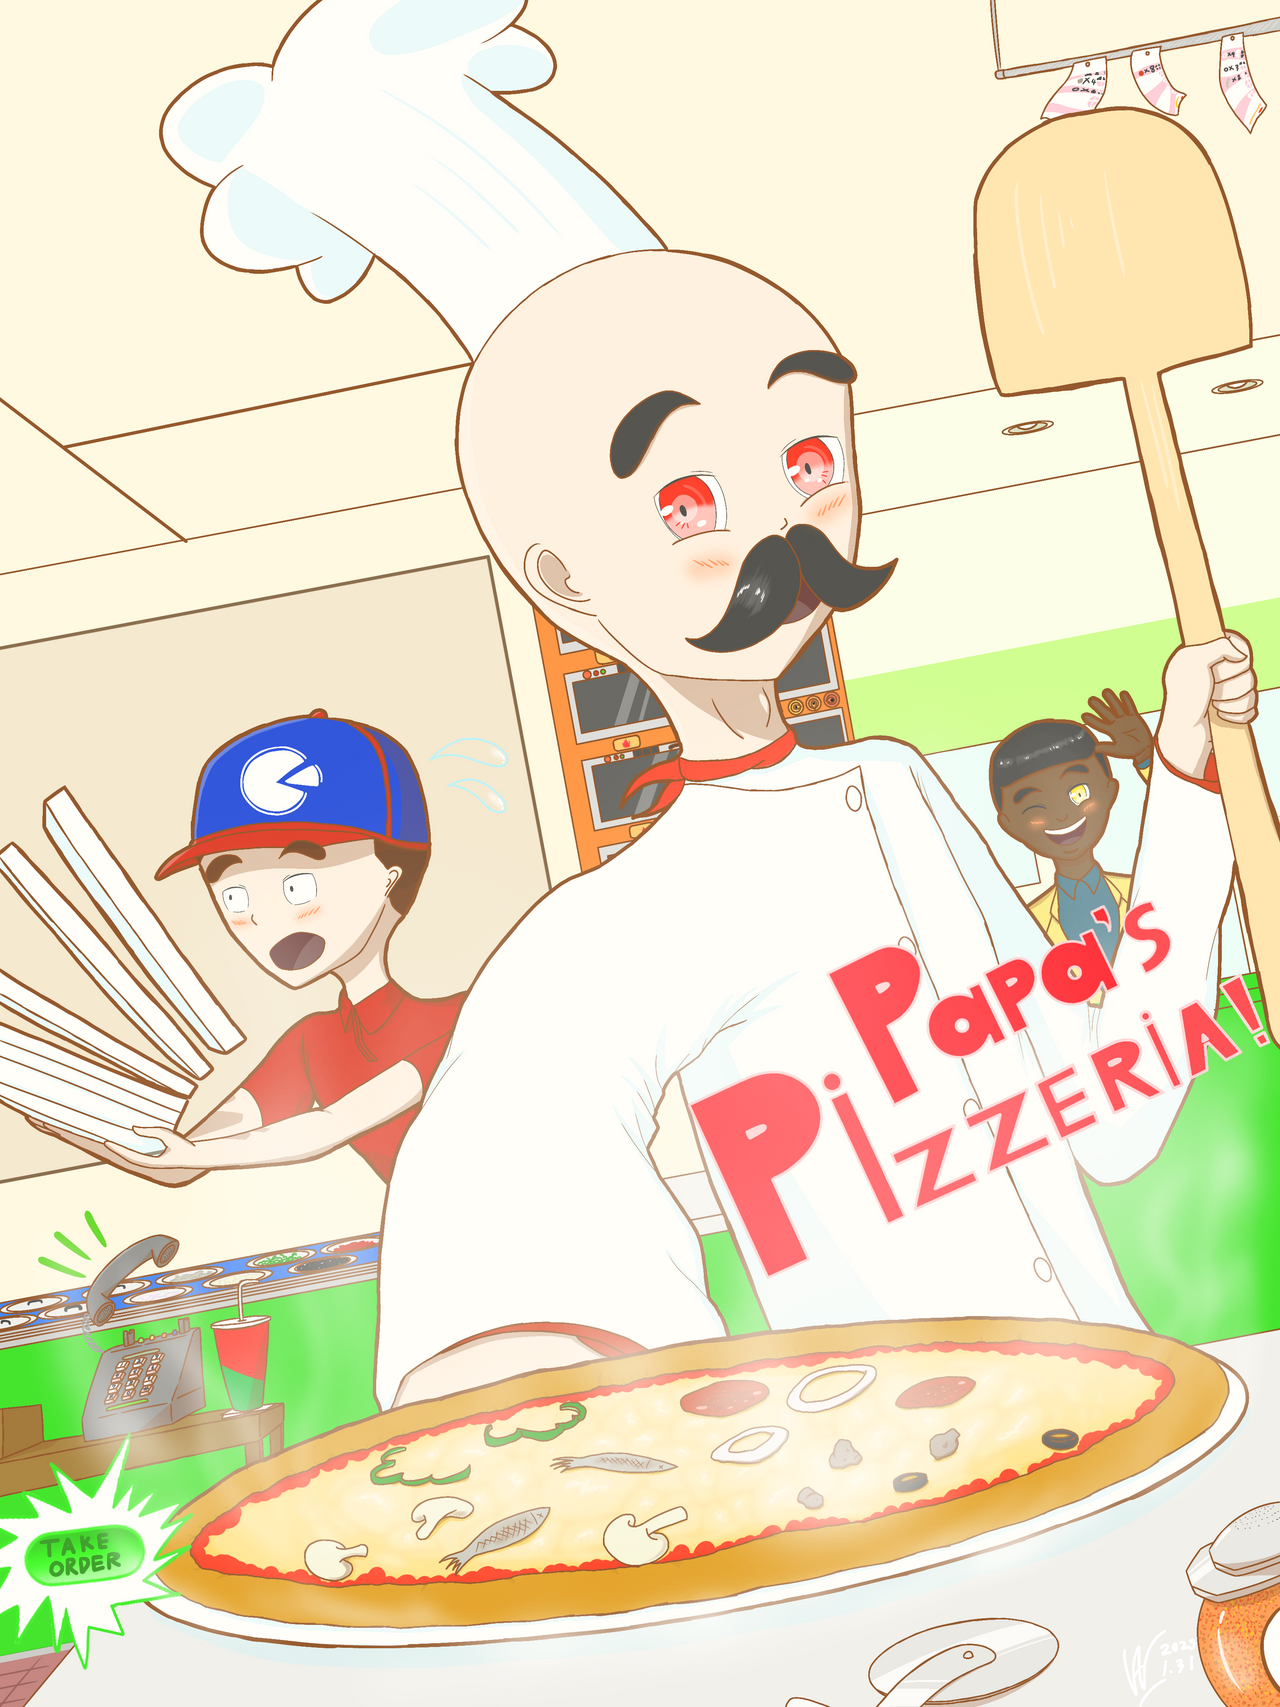 Papa's Pizzeria workers by DragonArtz01 on DeviantArt